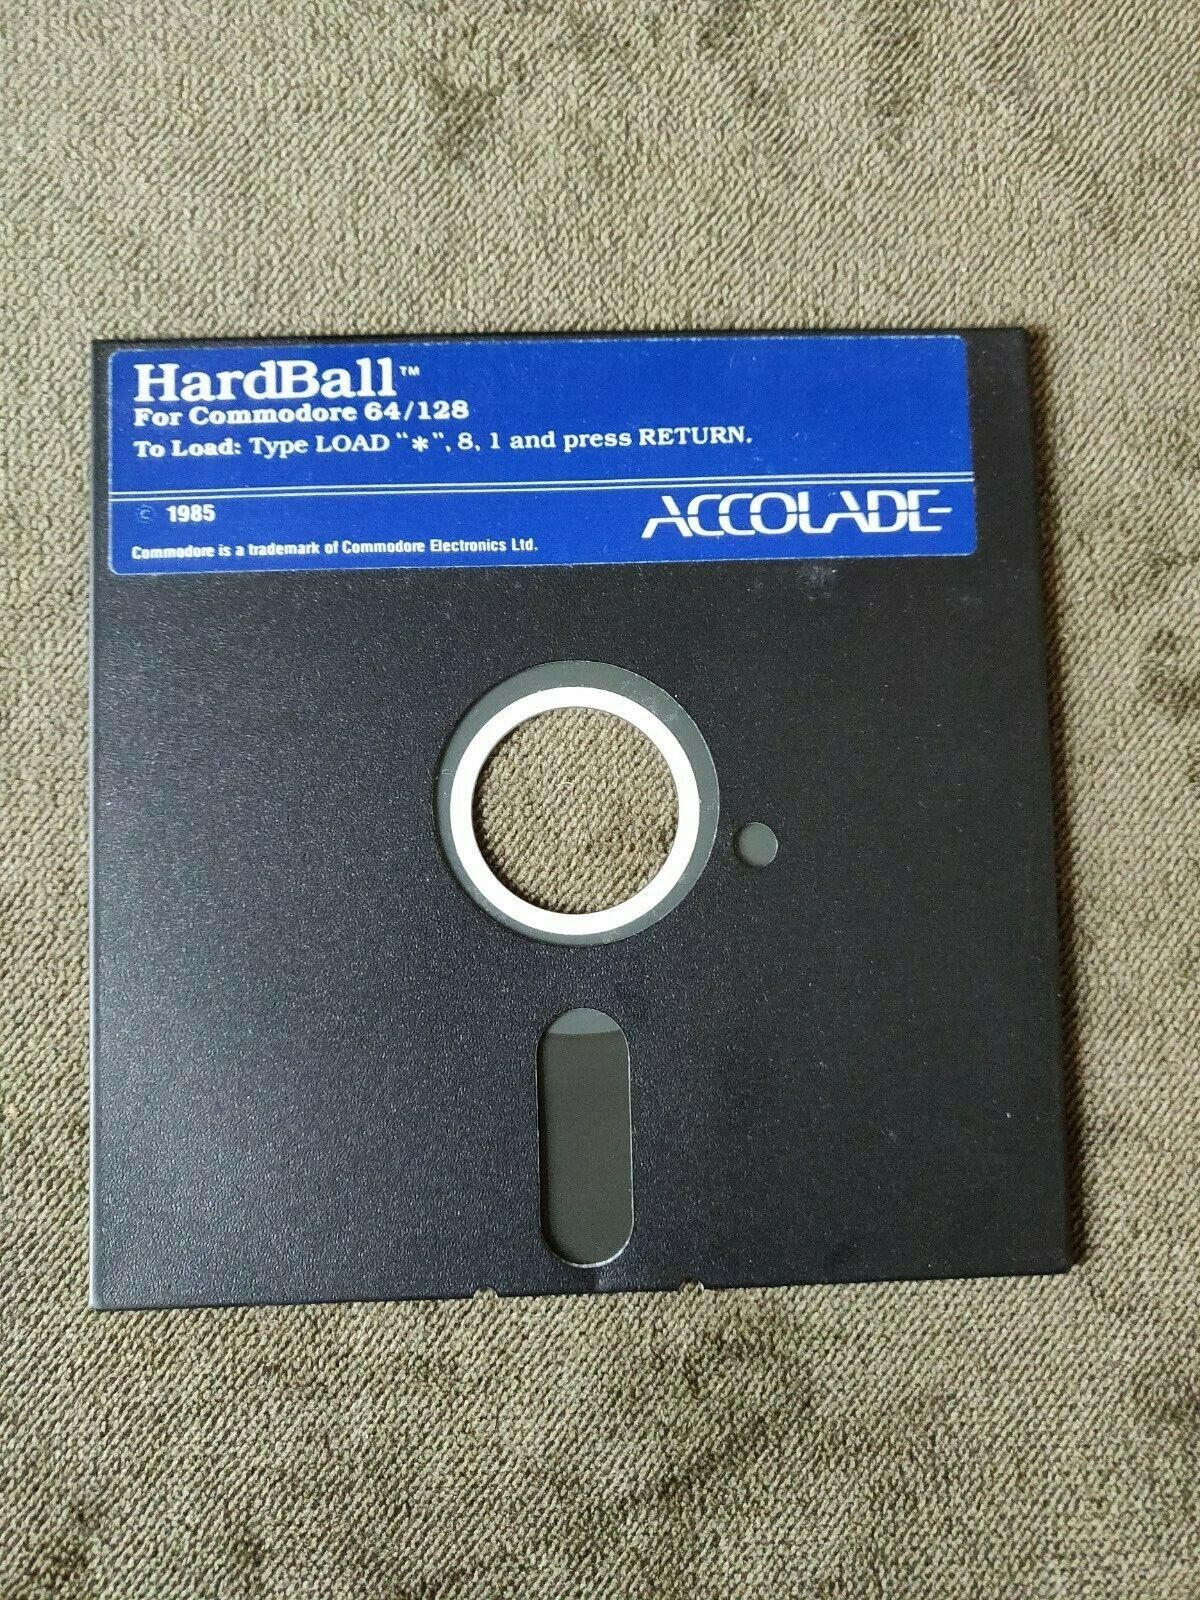 Hardball - Commodore 64/128